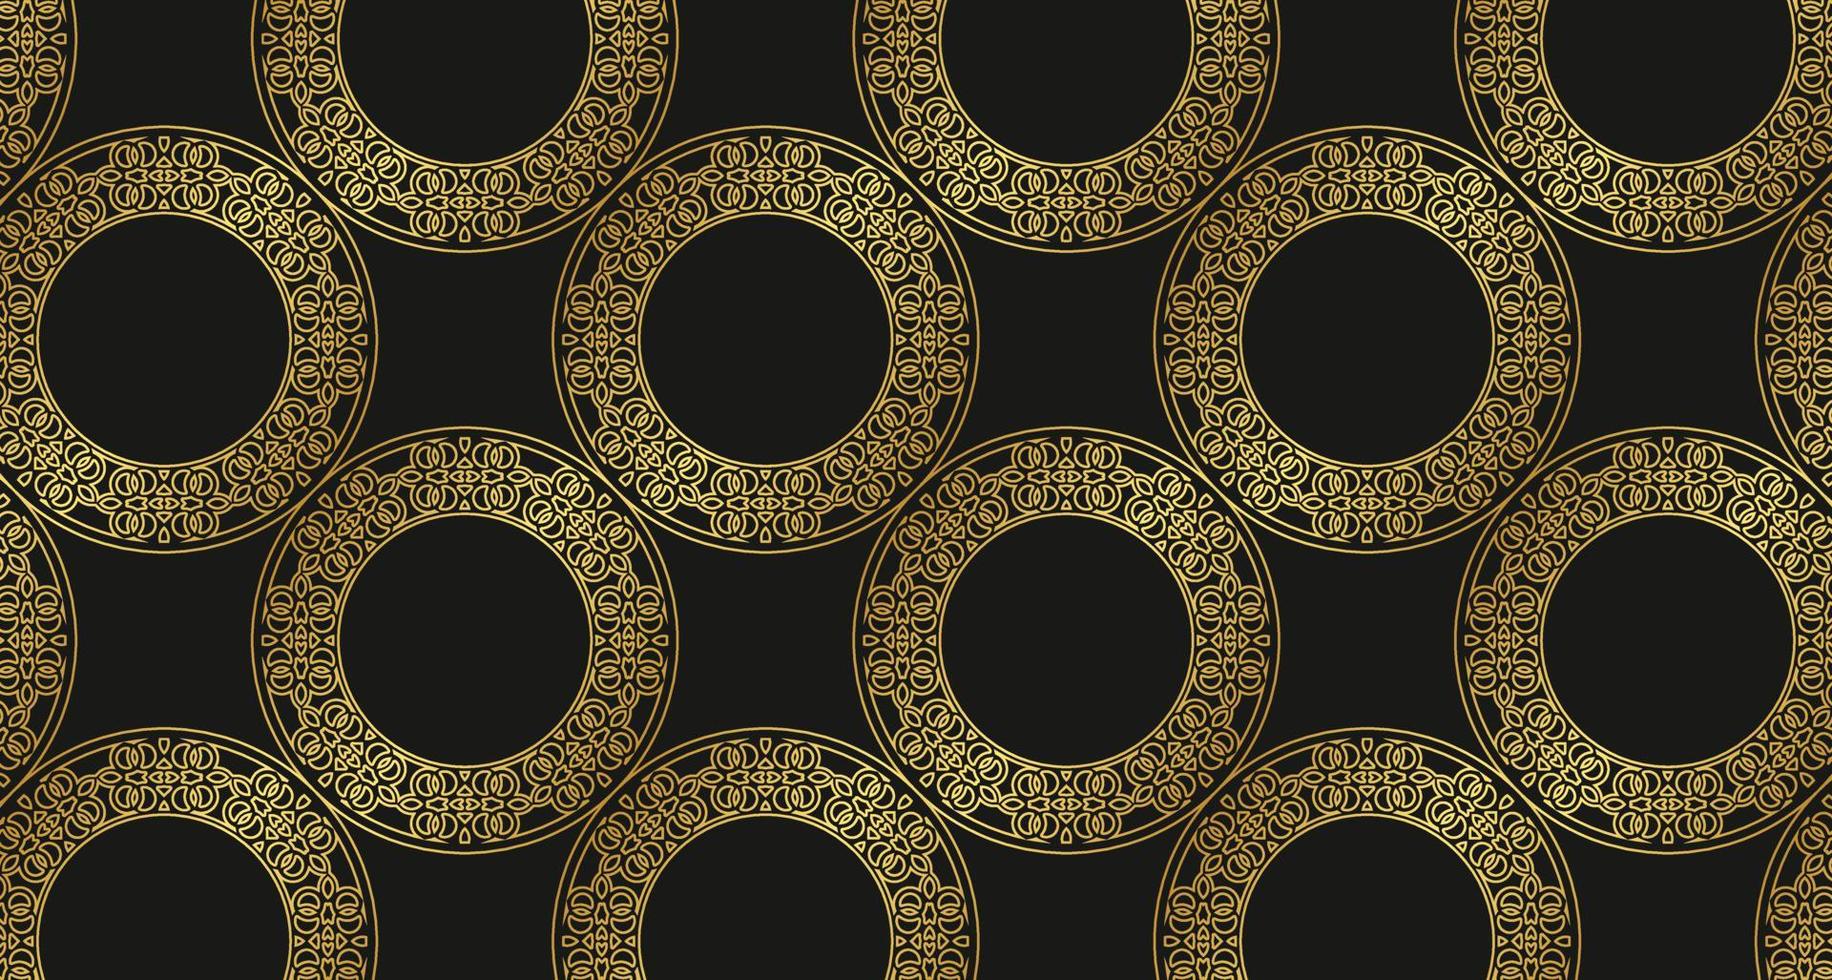 Luxury gold border pattern background vector